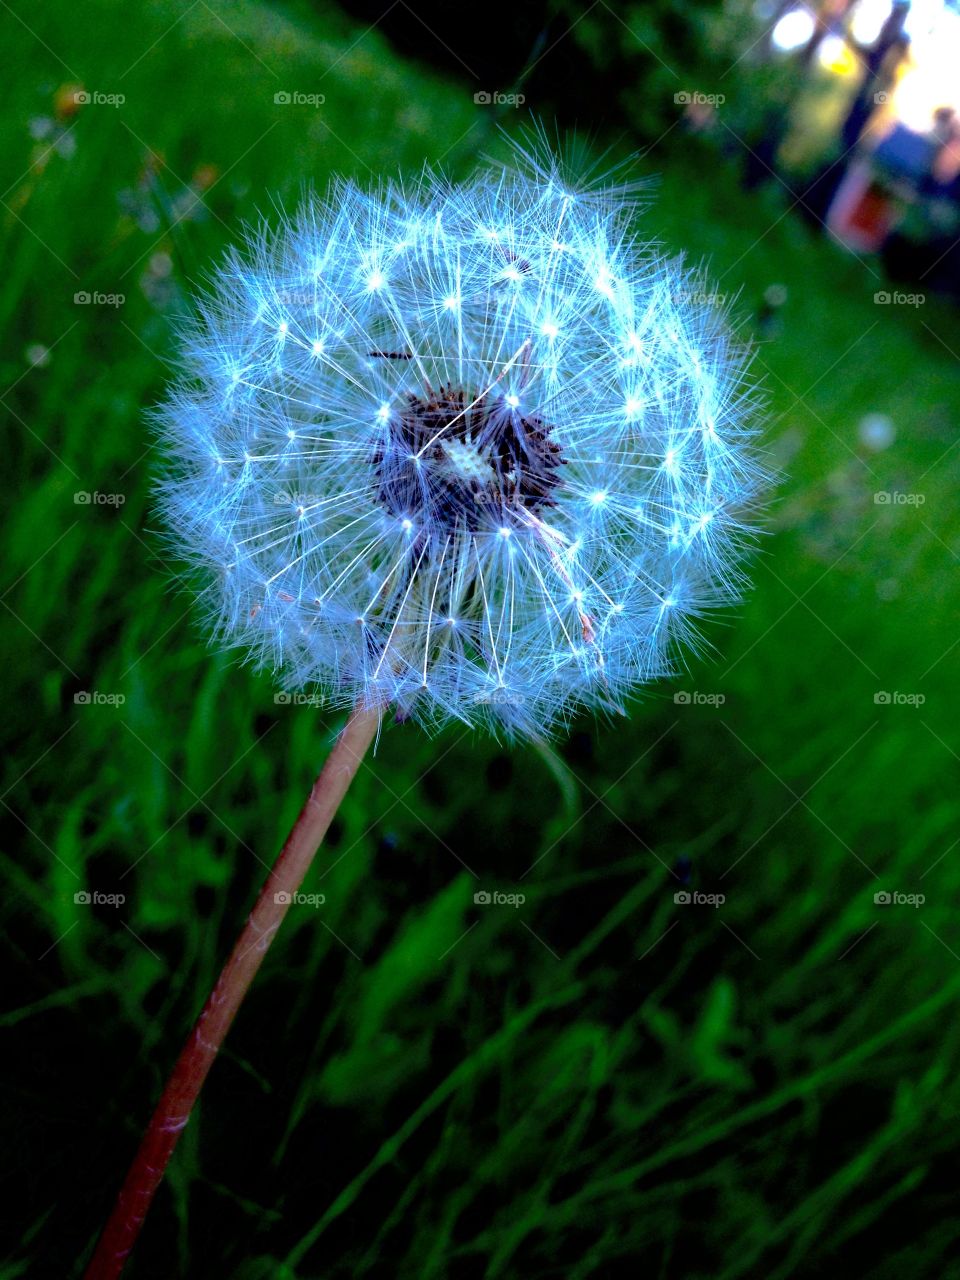 Blue dandelion. Blue dandelion
IT'S EDIT
edited with IPhone